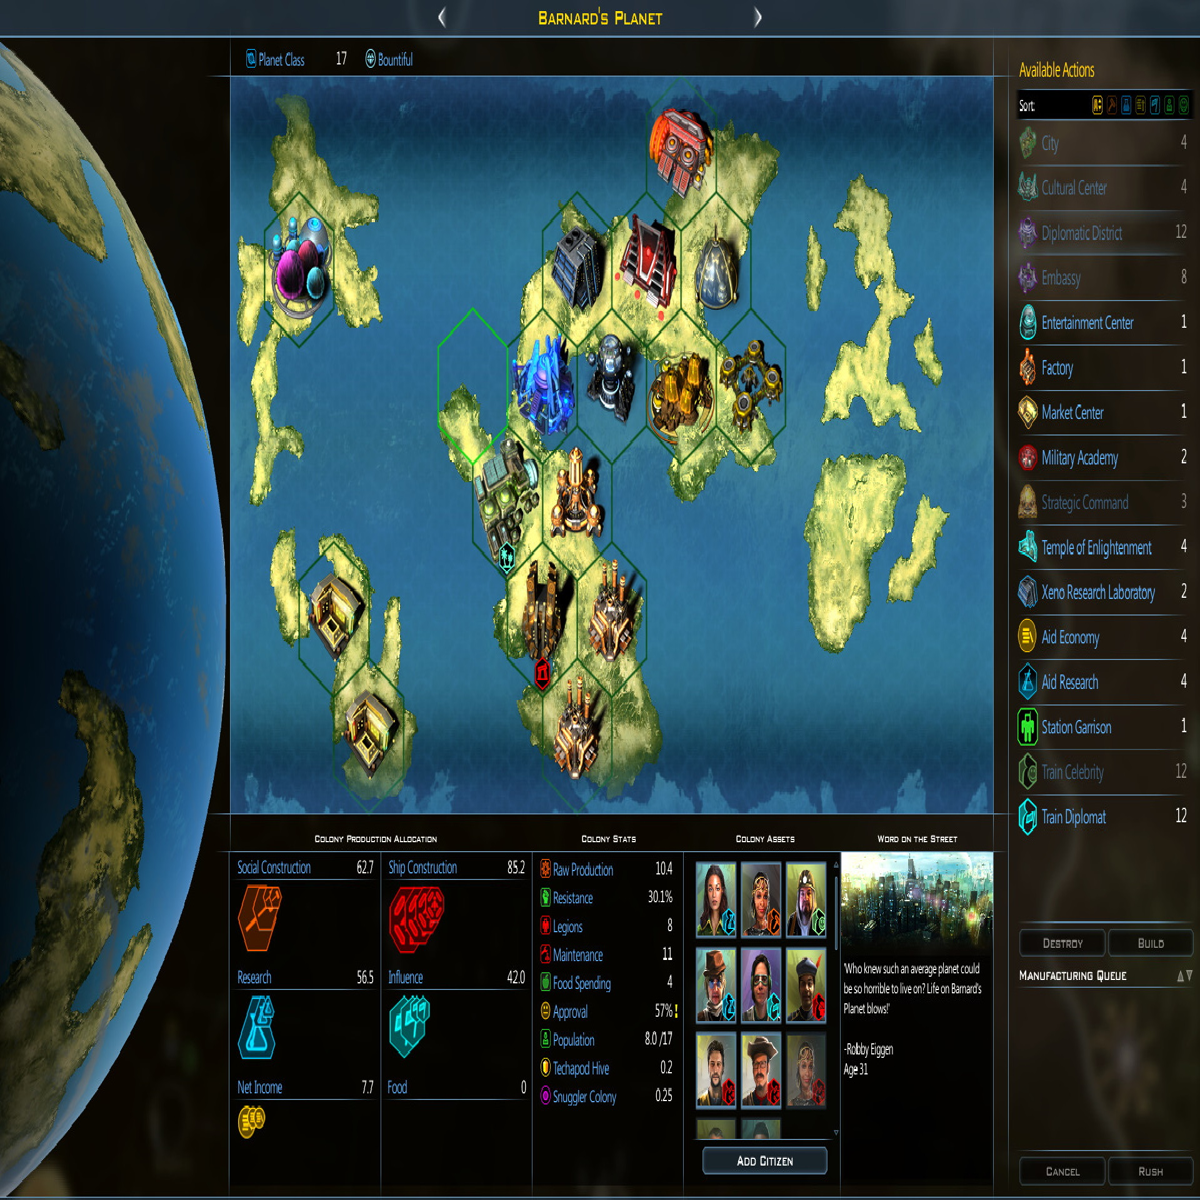 Galactic Civilizations III - Worlds in Crisis DLC